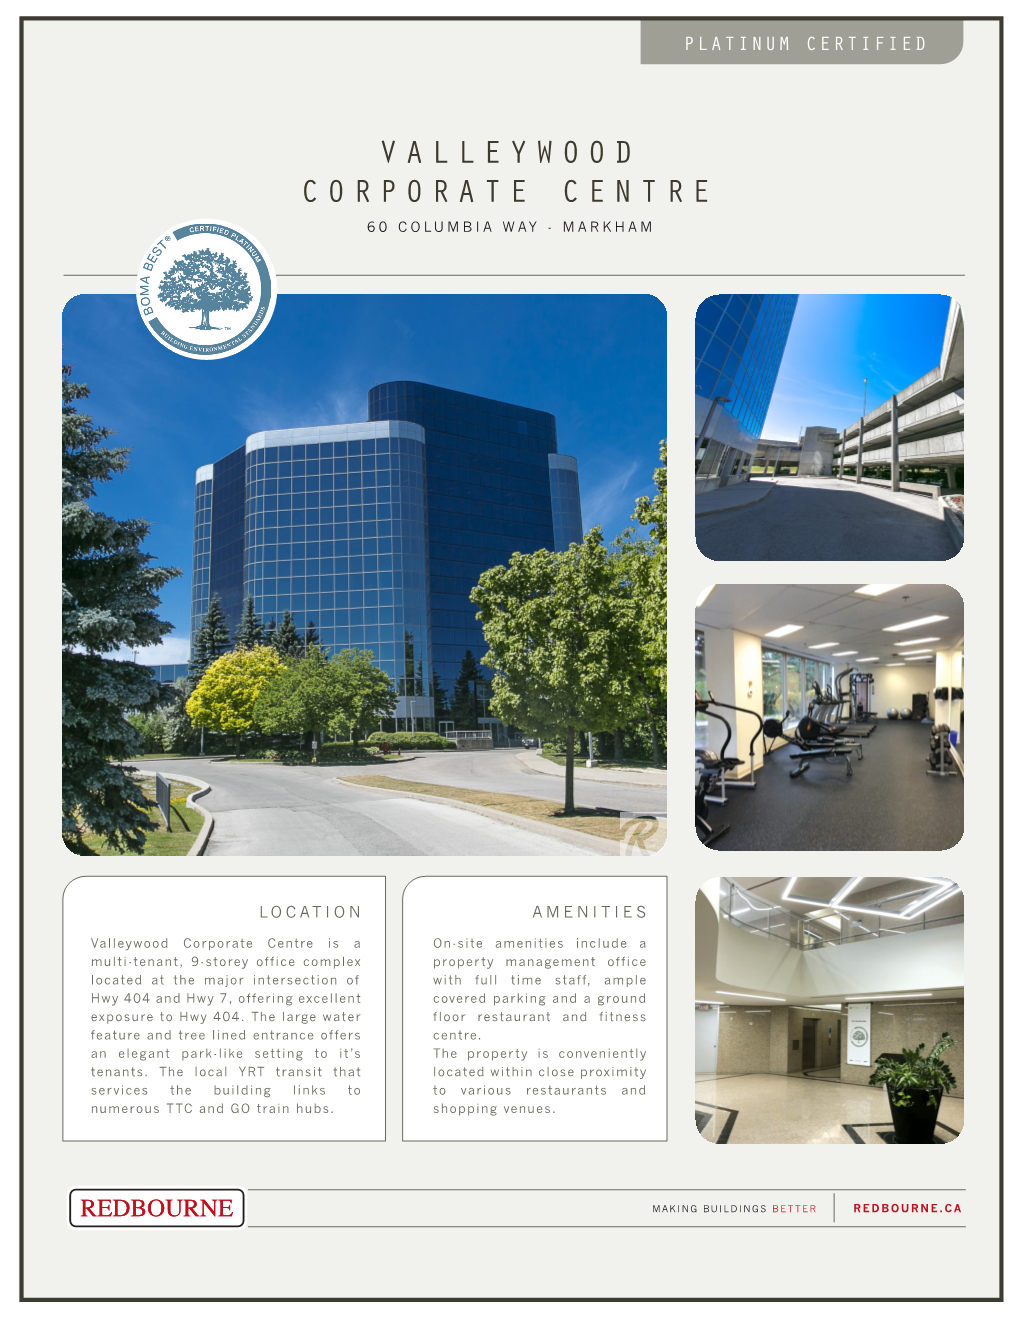 Valleywood Corporate Centre 60 Columbia Way - Markham